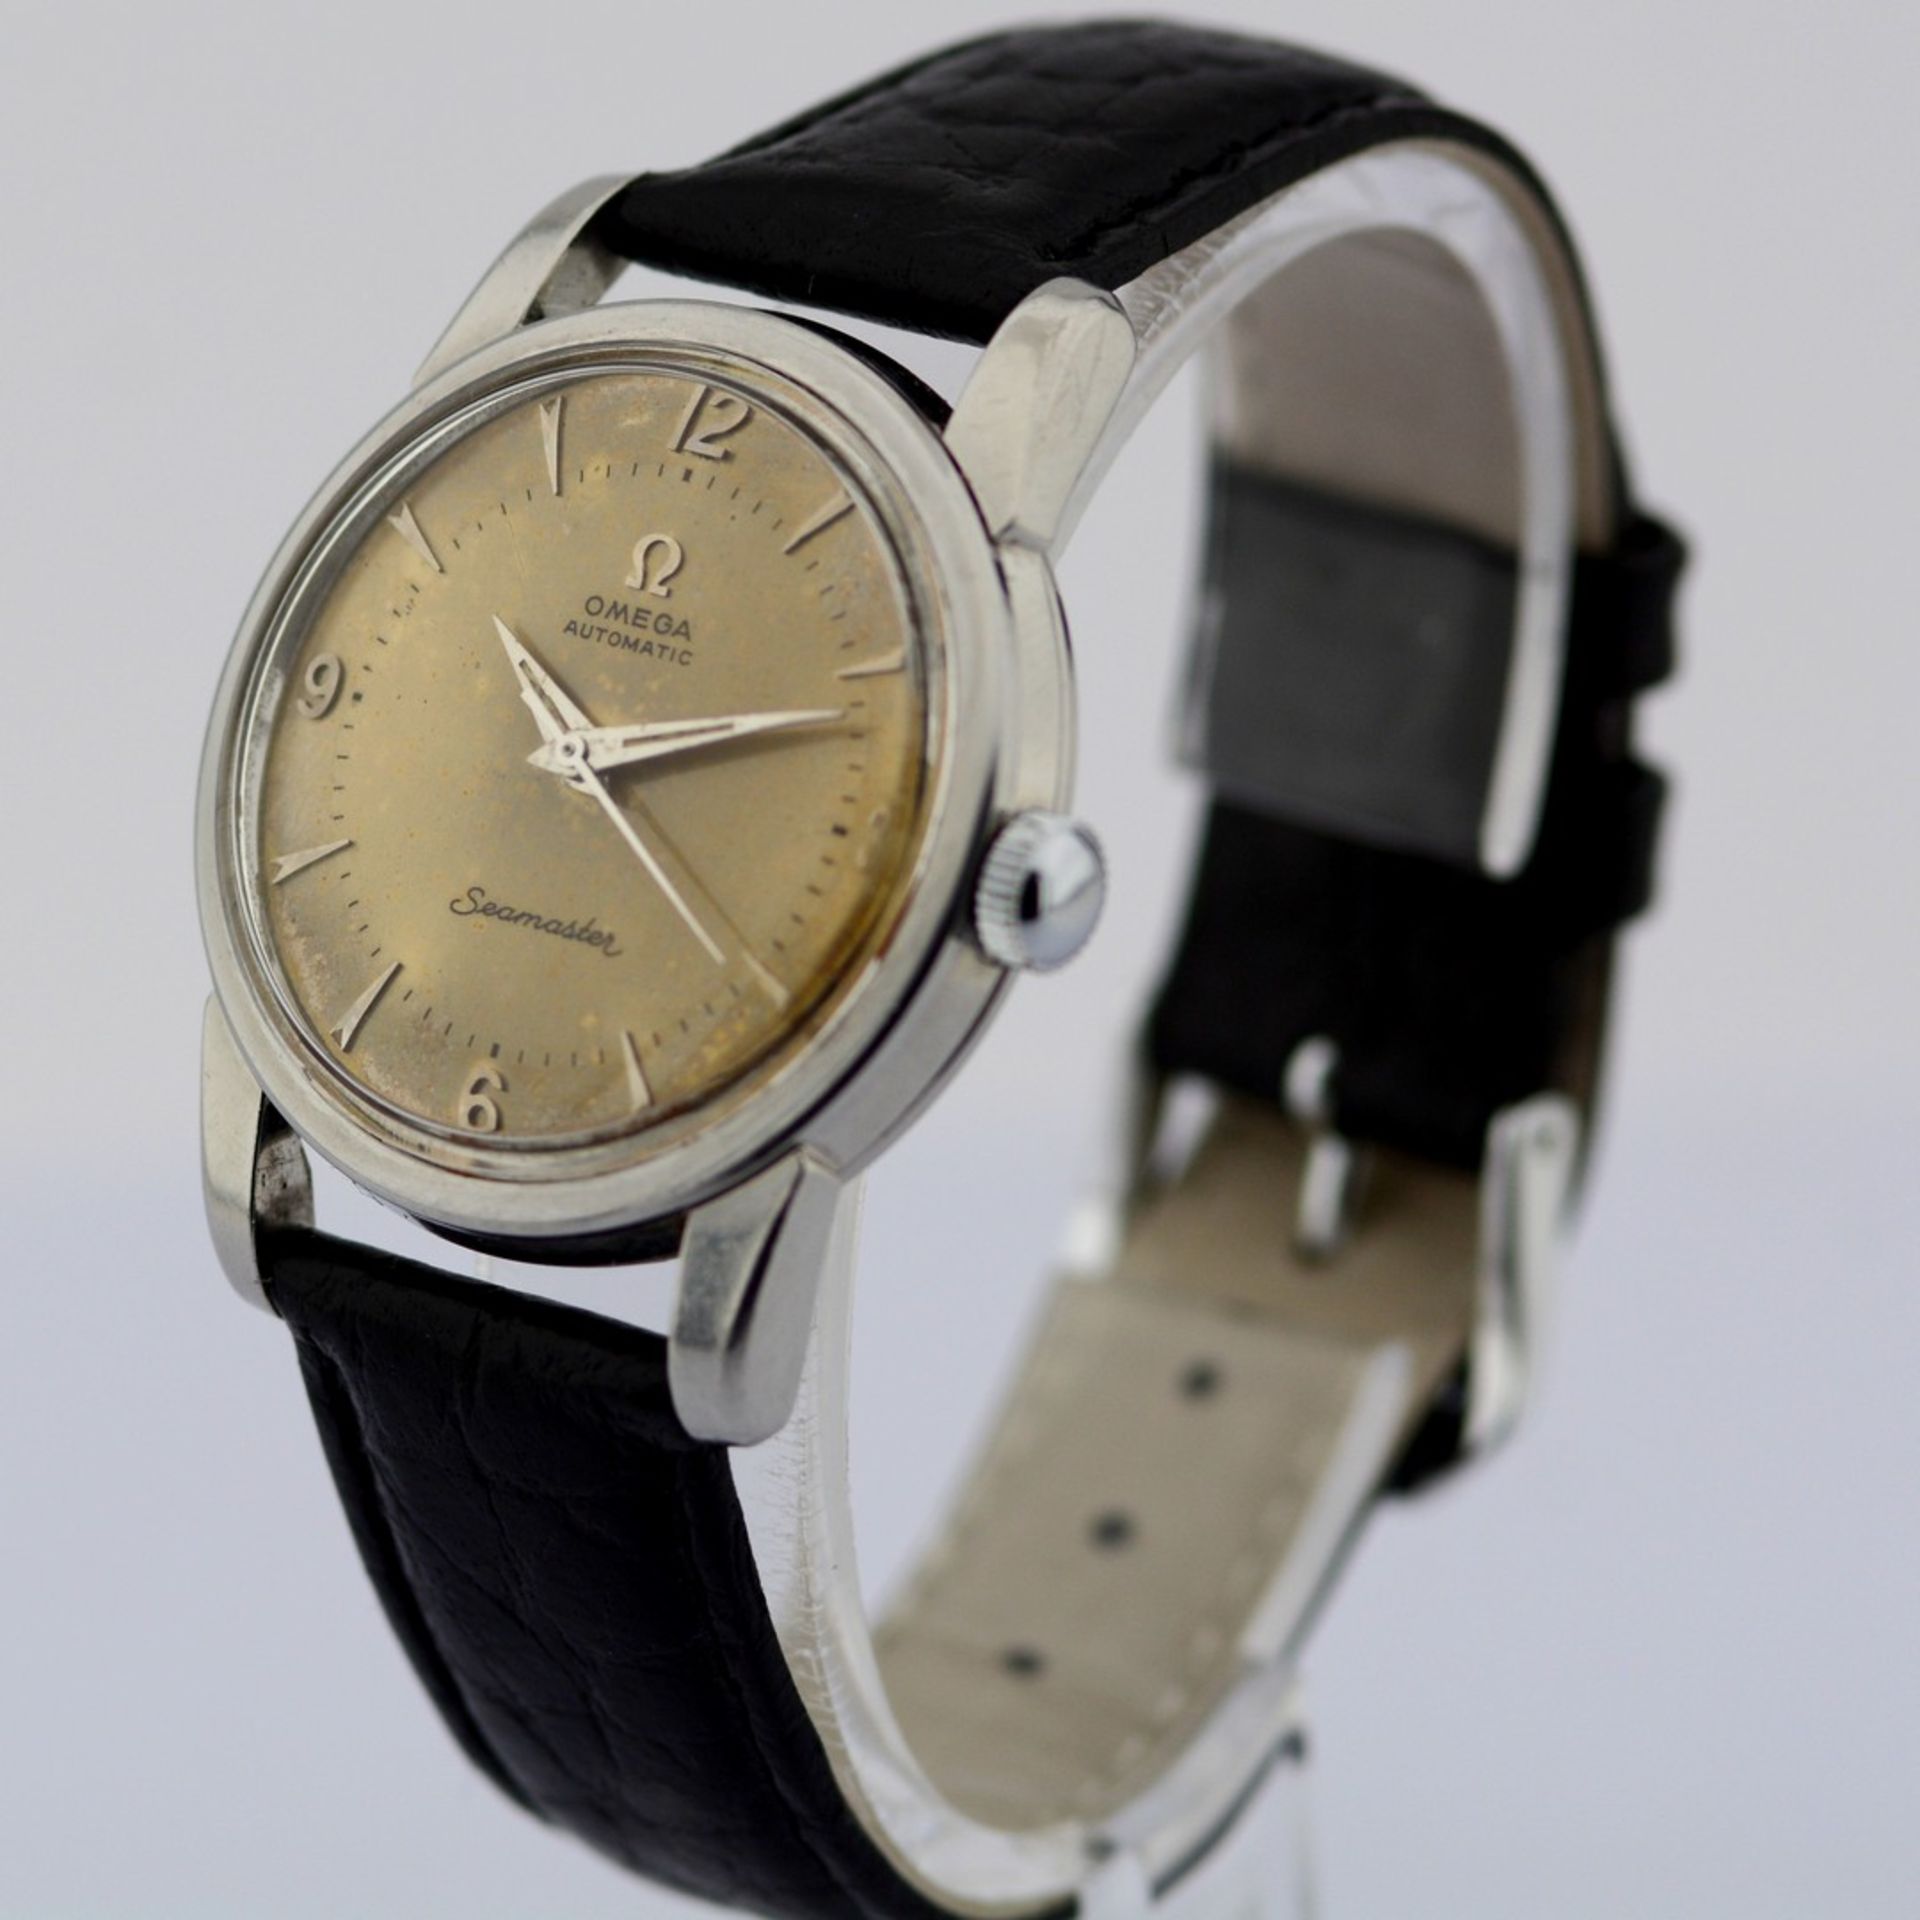 Omega / Seamaster Vintage Automatic - Gentlmen's Steel Wrist Watch - Image 5 of 9